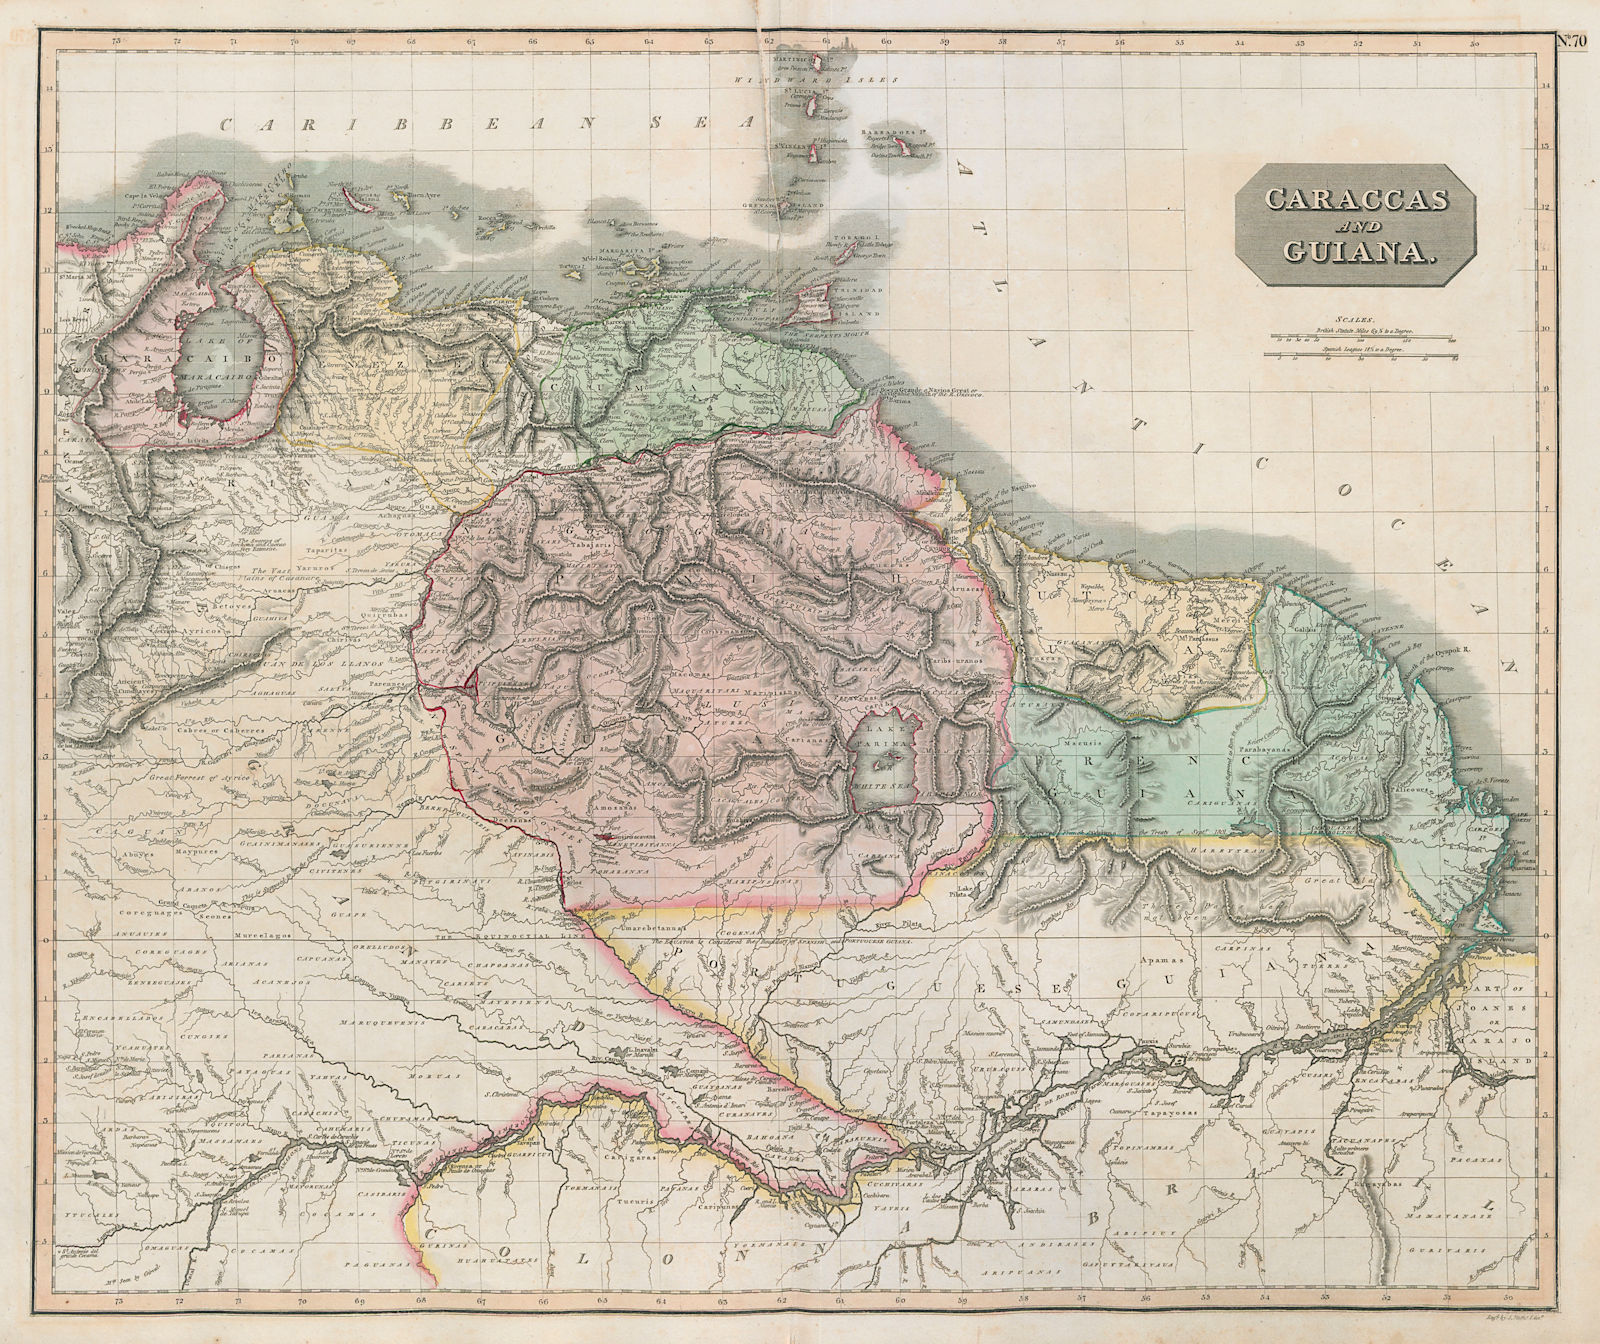 Associate Product "Caraccas and Guiana". Venezuela Guyanas & Amazonas. THOMSON 1817 old map